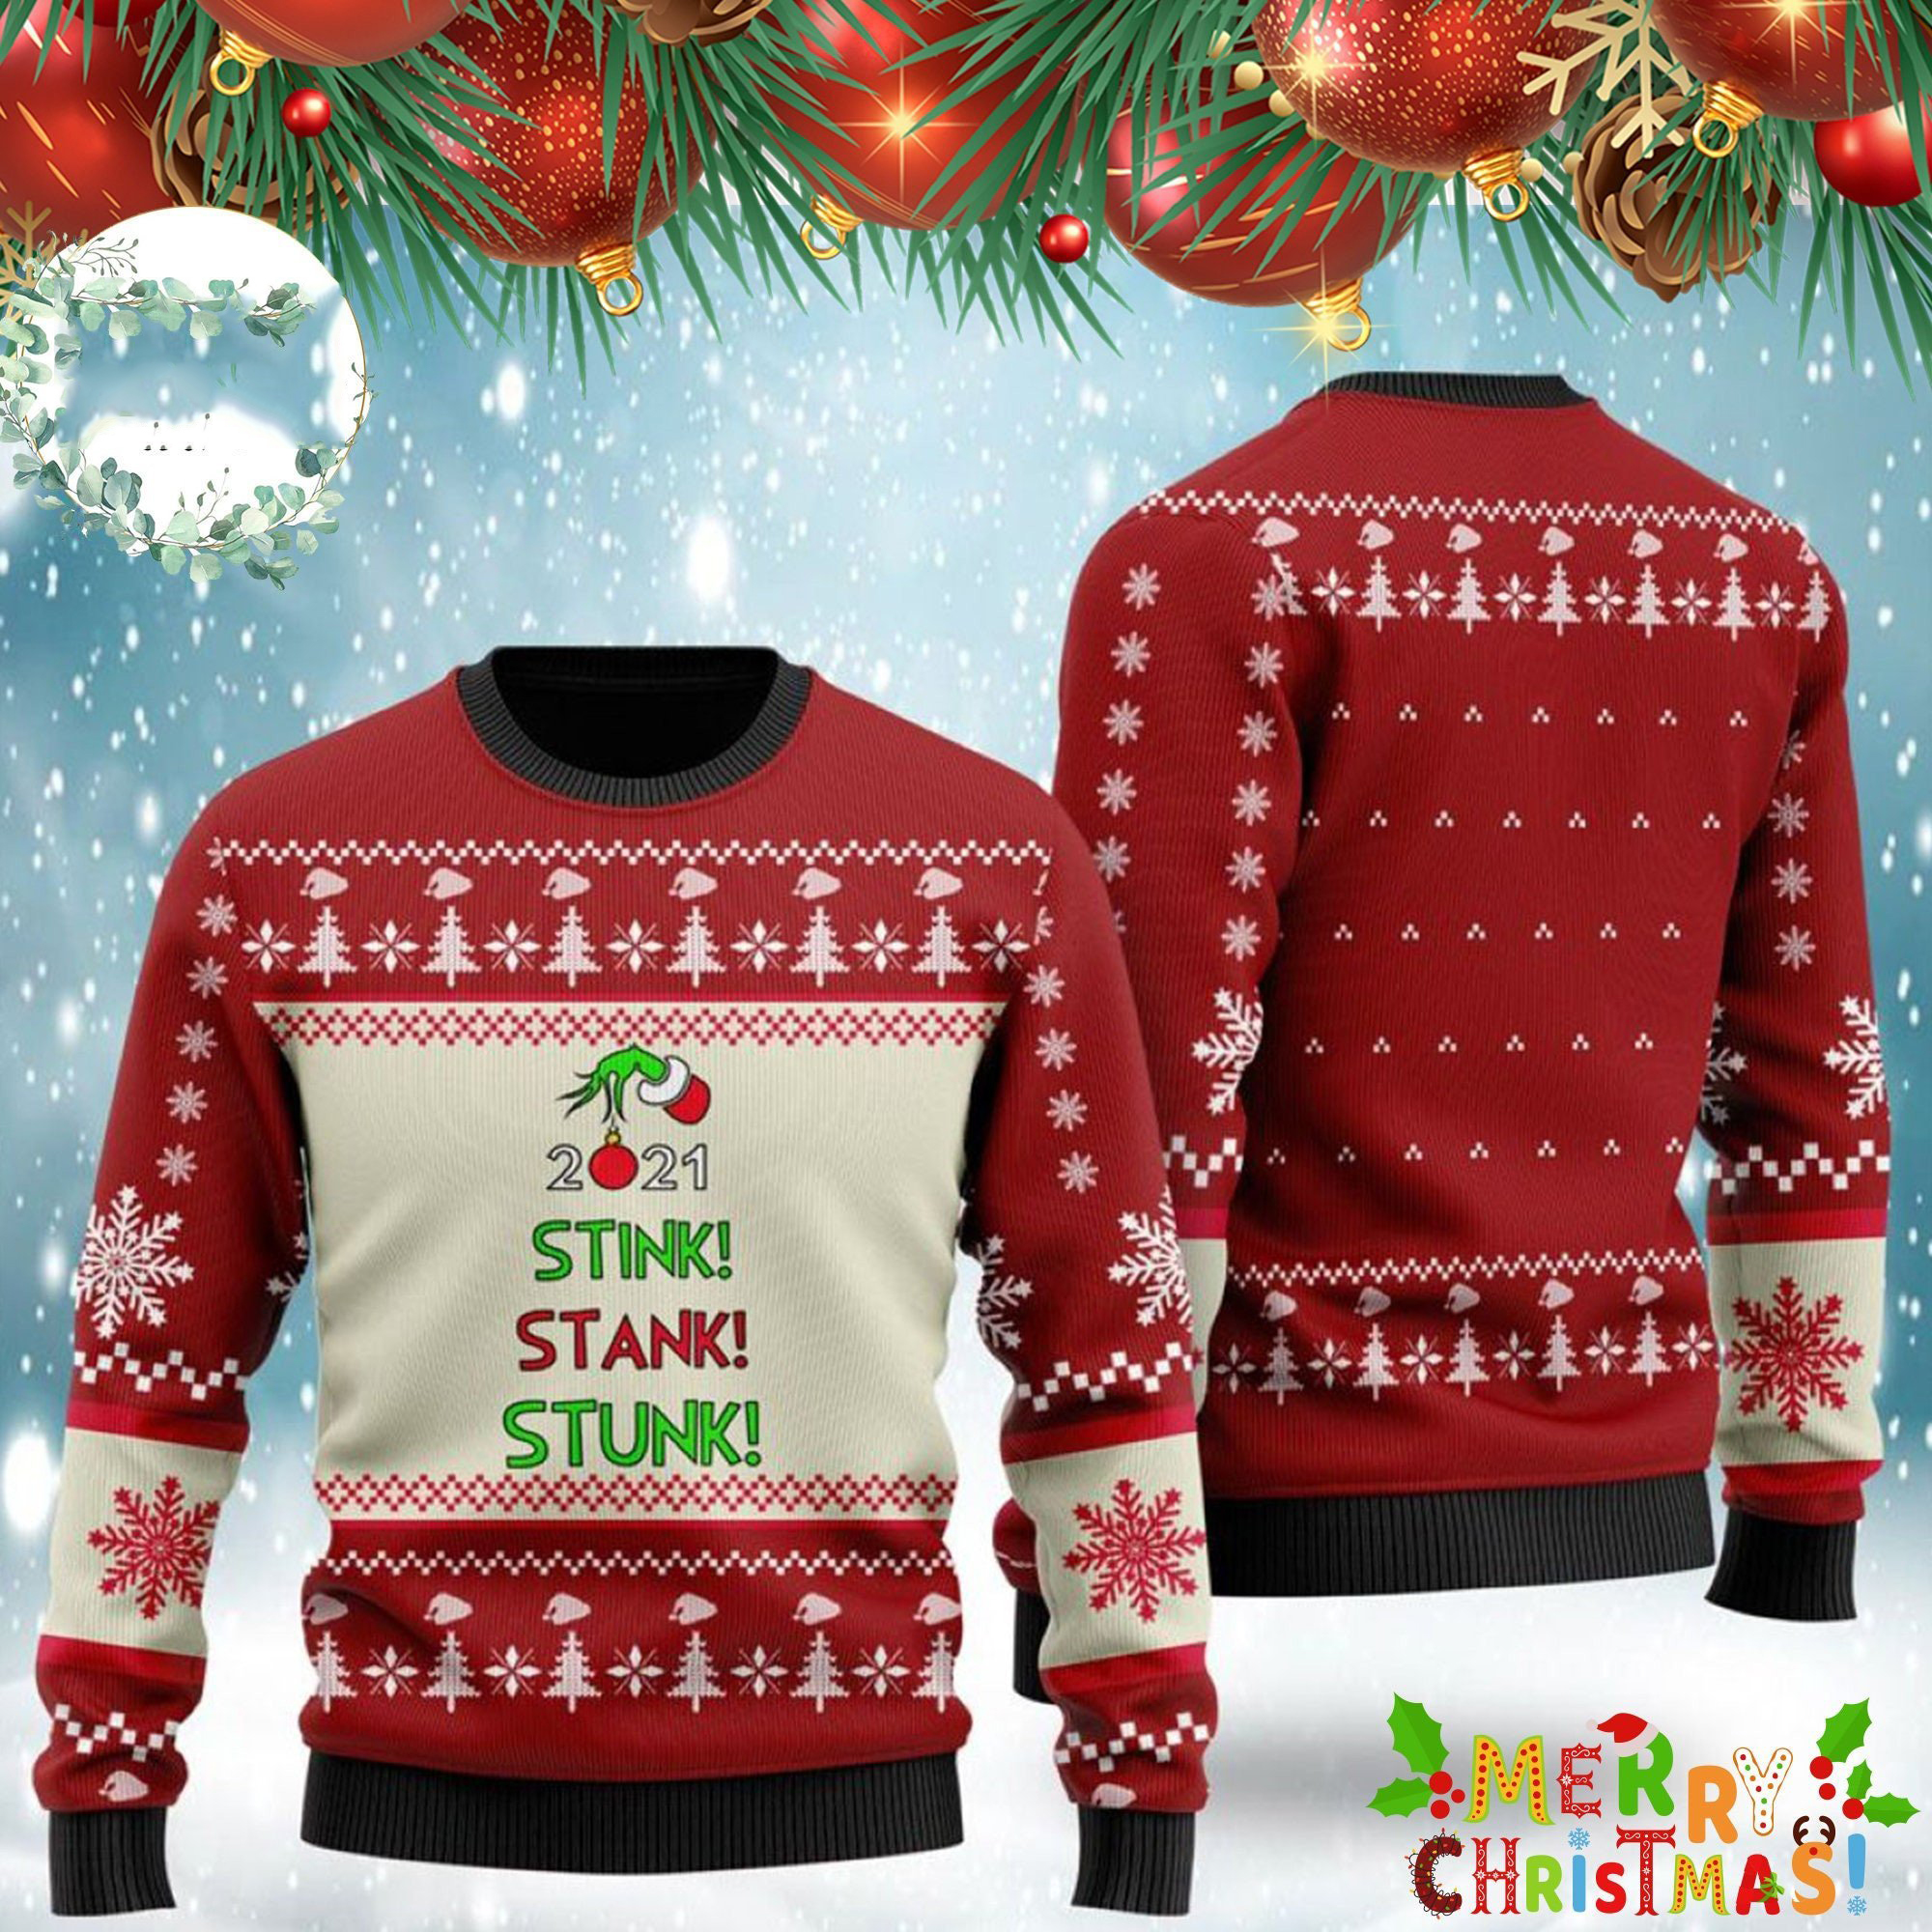 Grinch 2021 stink stank stunk ugly sweater